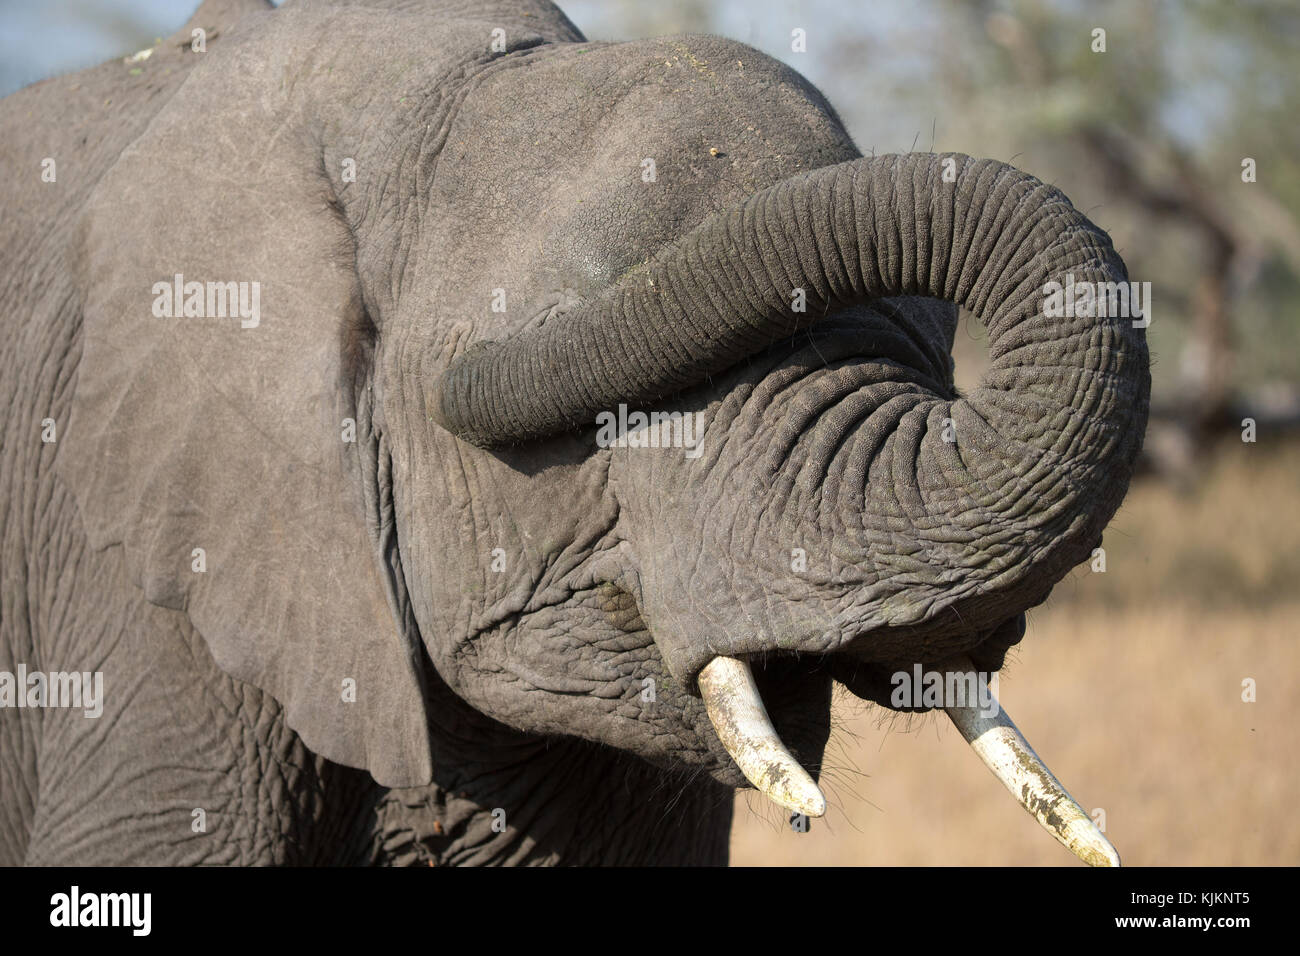 Parco Nazionale del Serengeti. Elefante africano (Loxodonta africana). Tanzania. Foto Stock